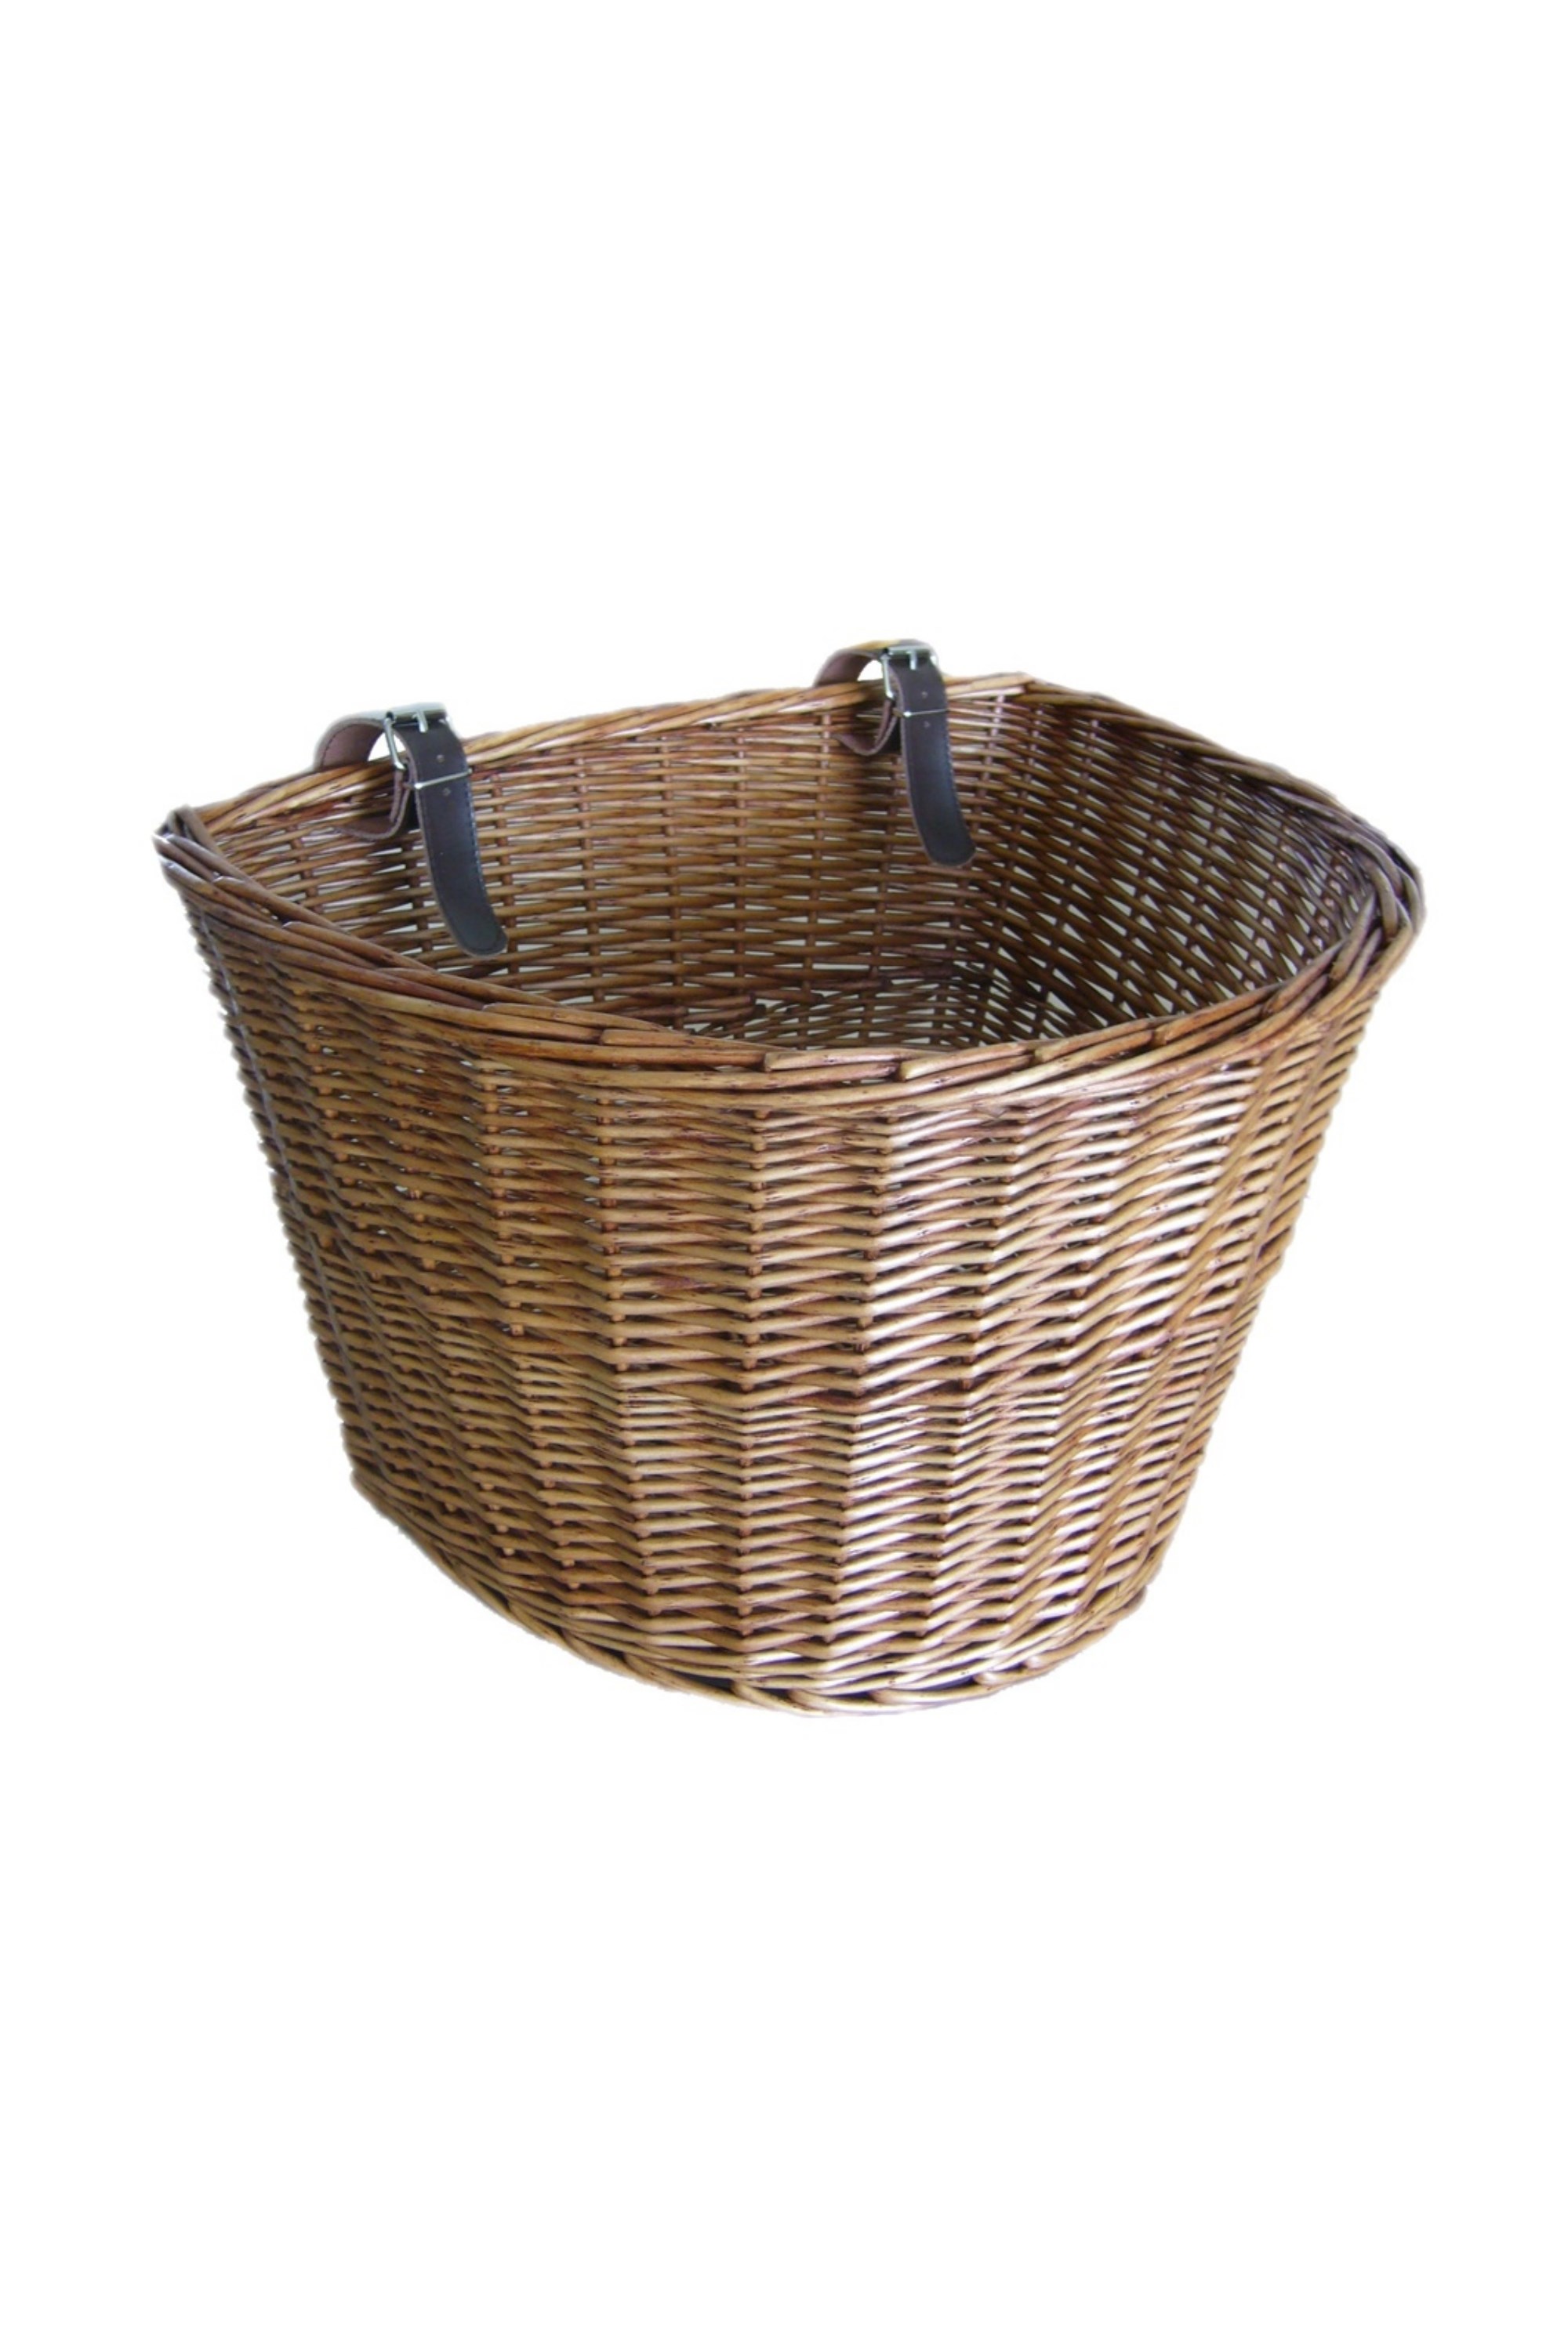 Wicker Bicycle Basket -